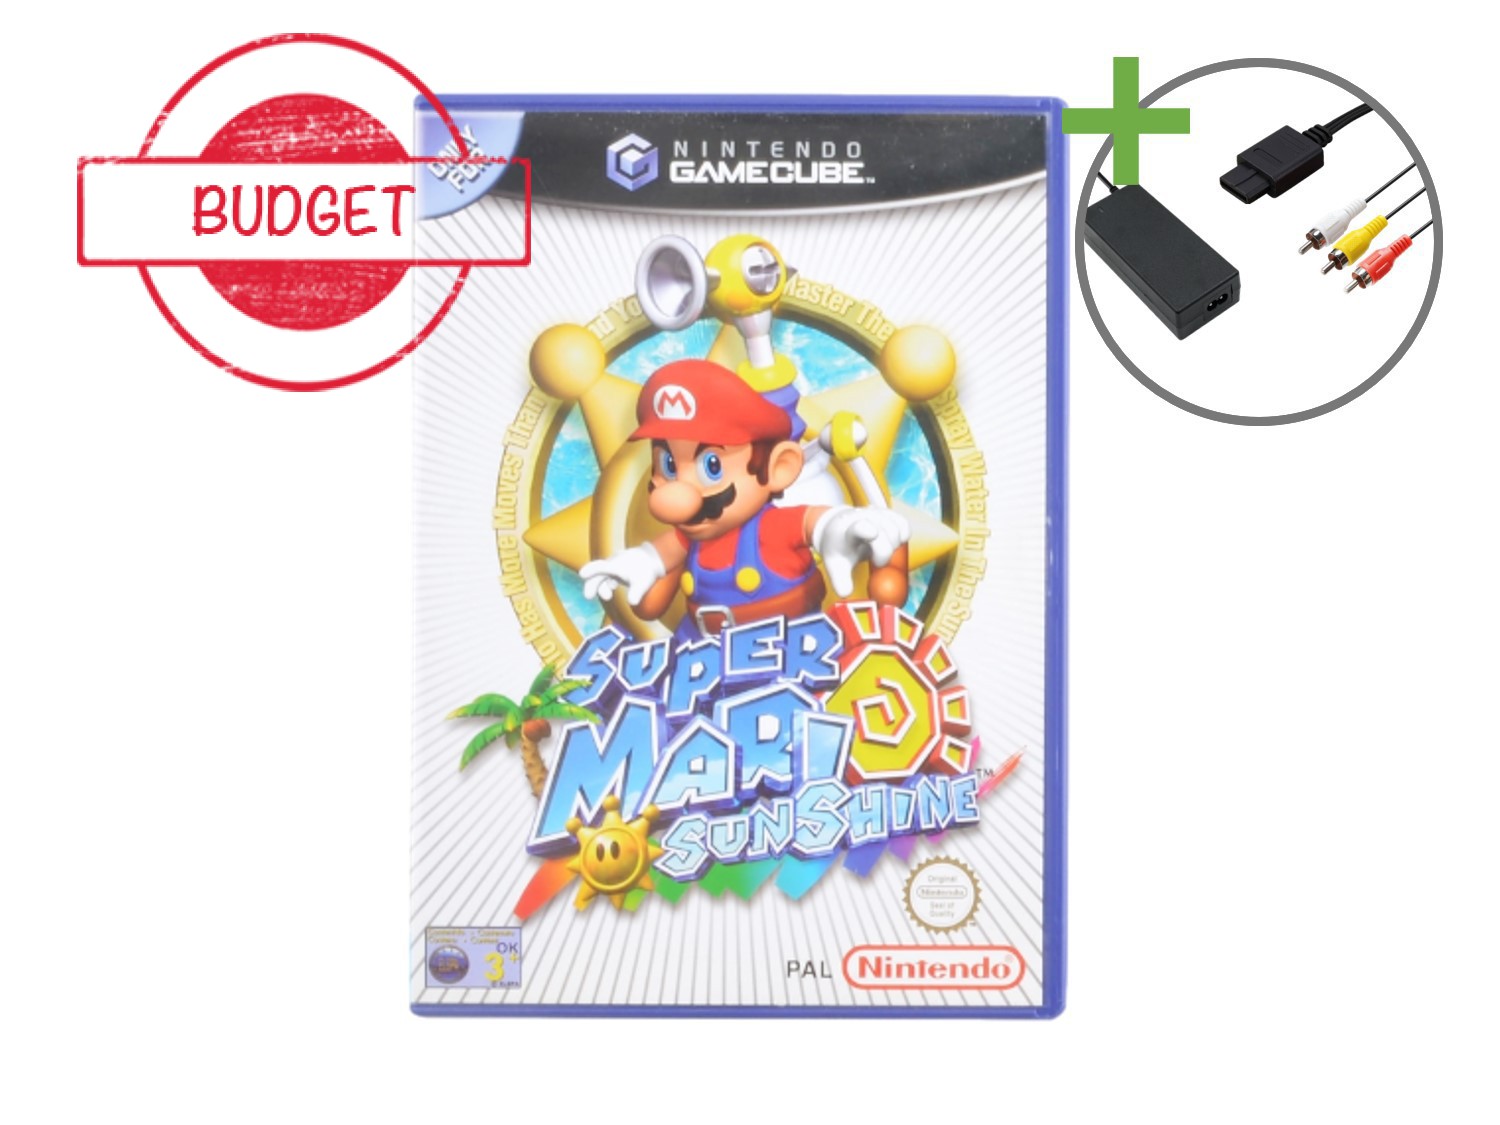 Nintendo Gamecube Starter Pack - Super Mario Sunshine Edition - Budget - Gamecube Hardware - 4